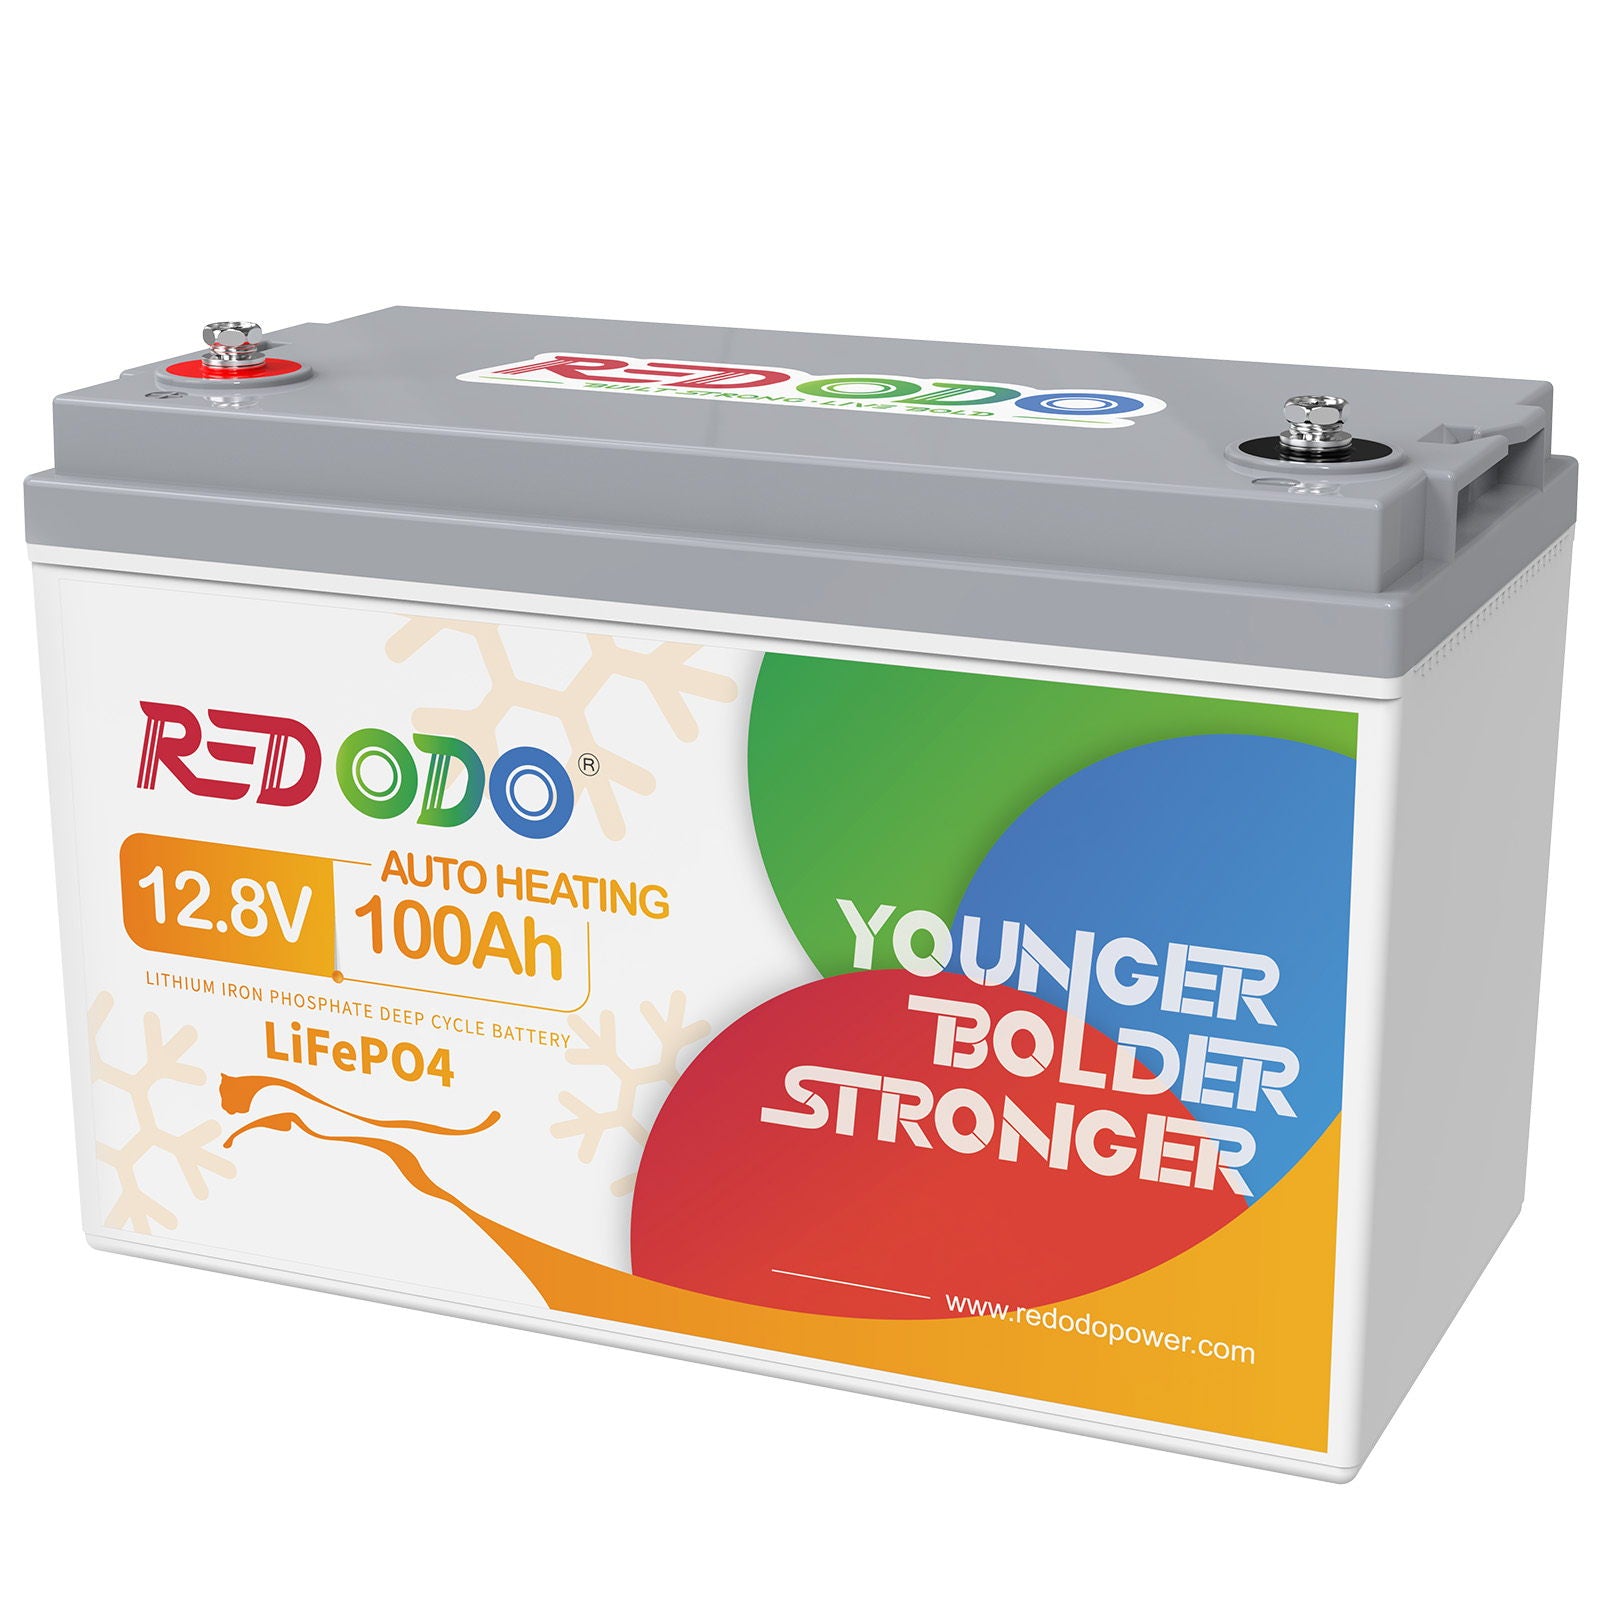 Redodo 12V 100Ah LiFePO4 battery with self-heating